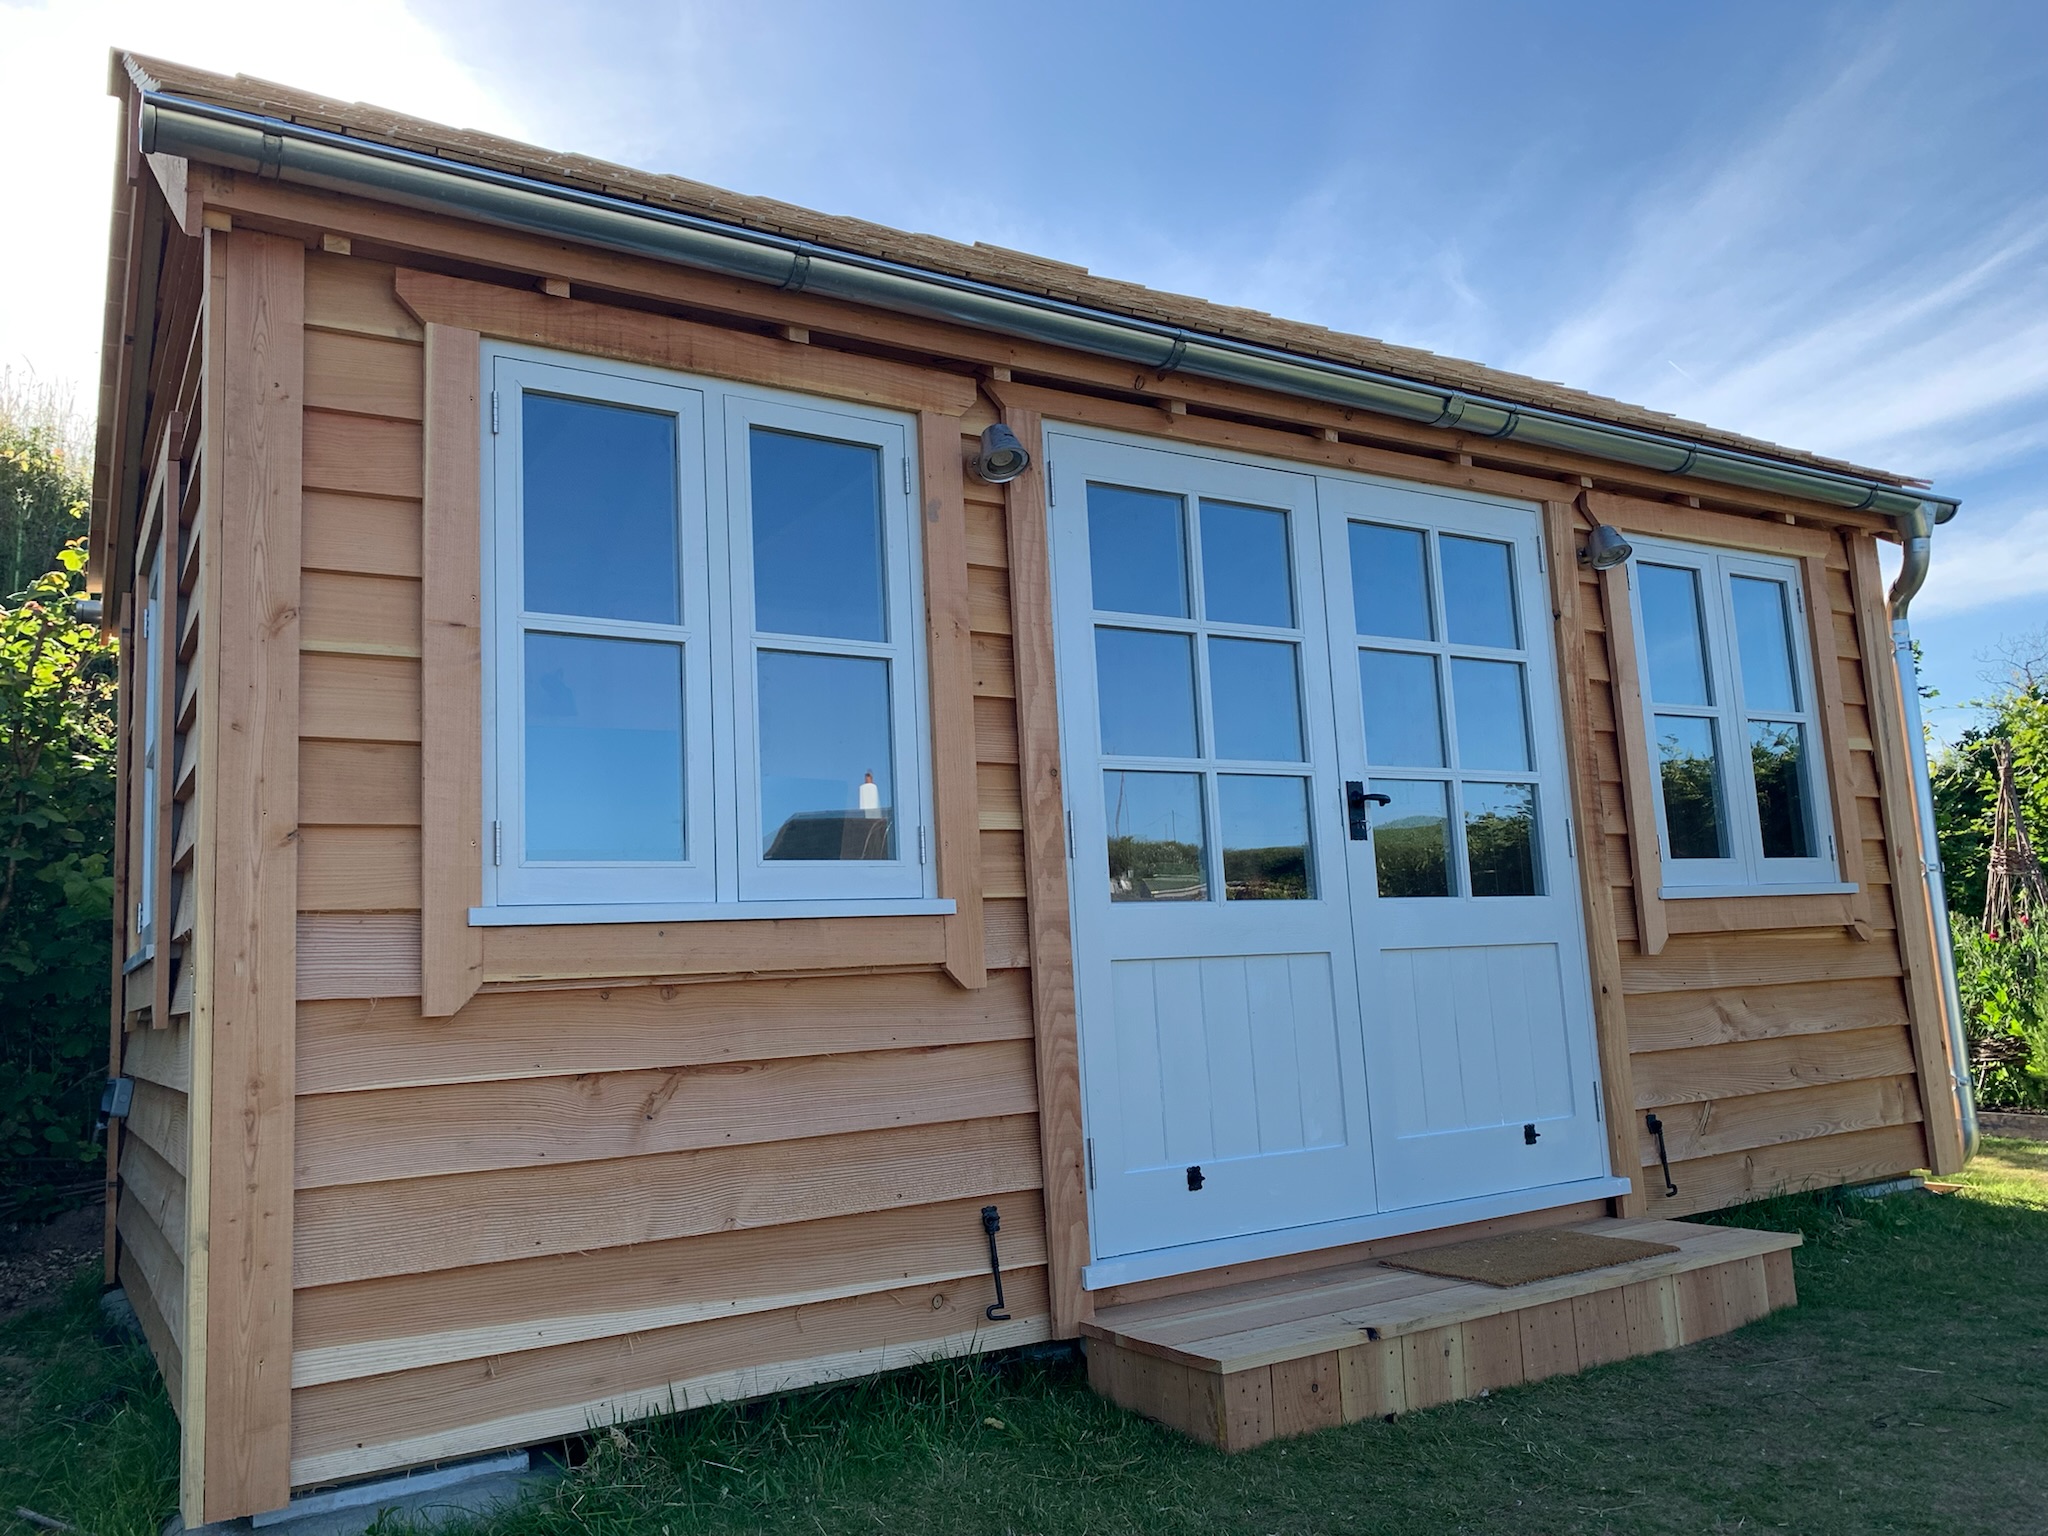 Timber garden Office With handmade doors and windows